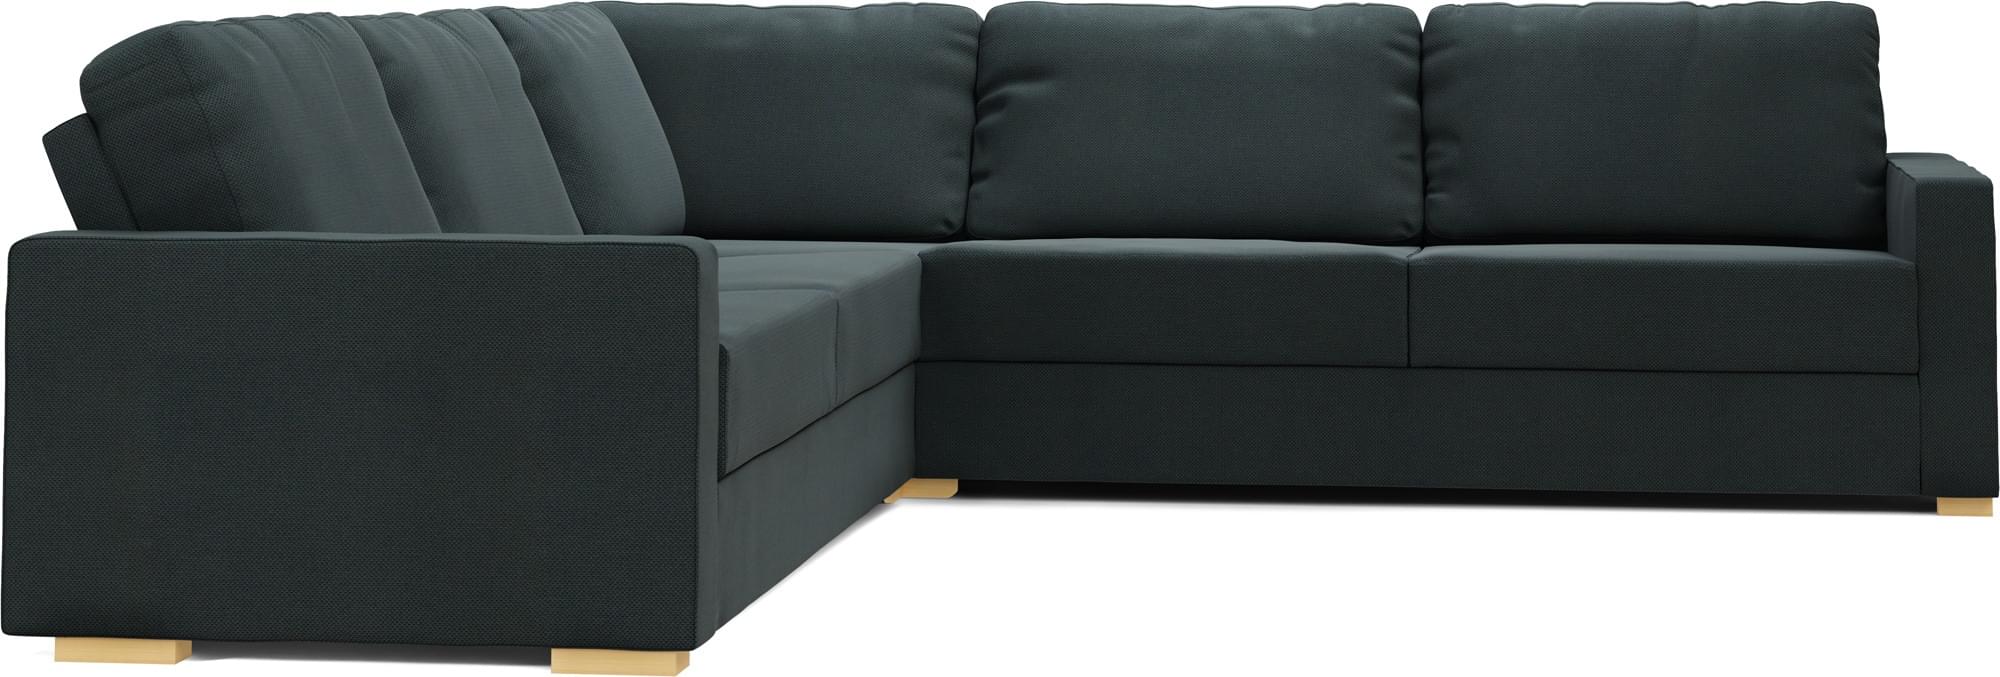 Ula 3X3 Corner Double Sofa Bed